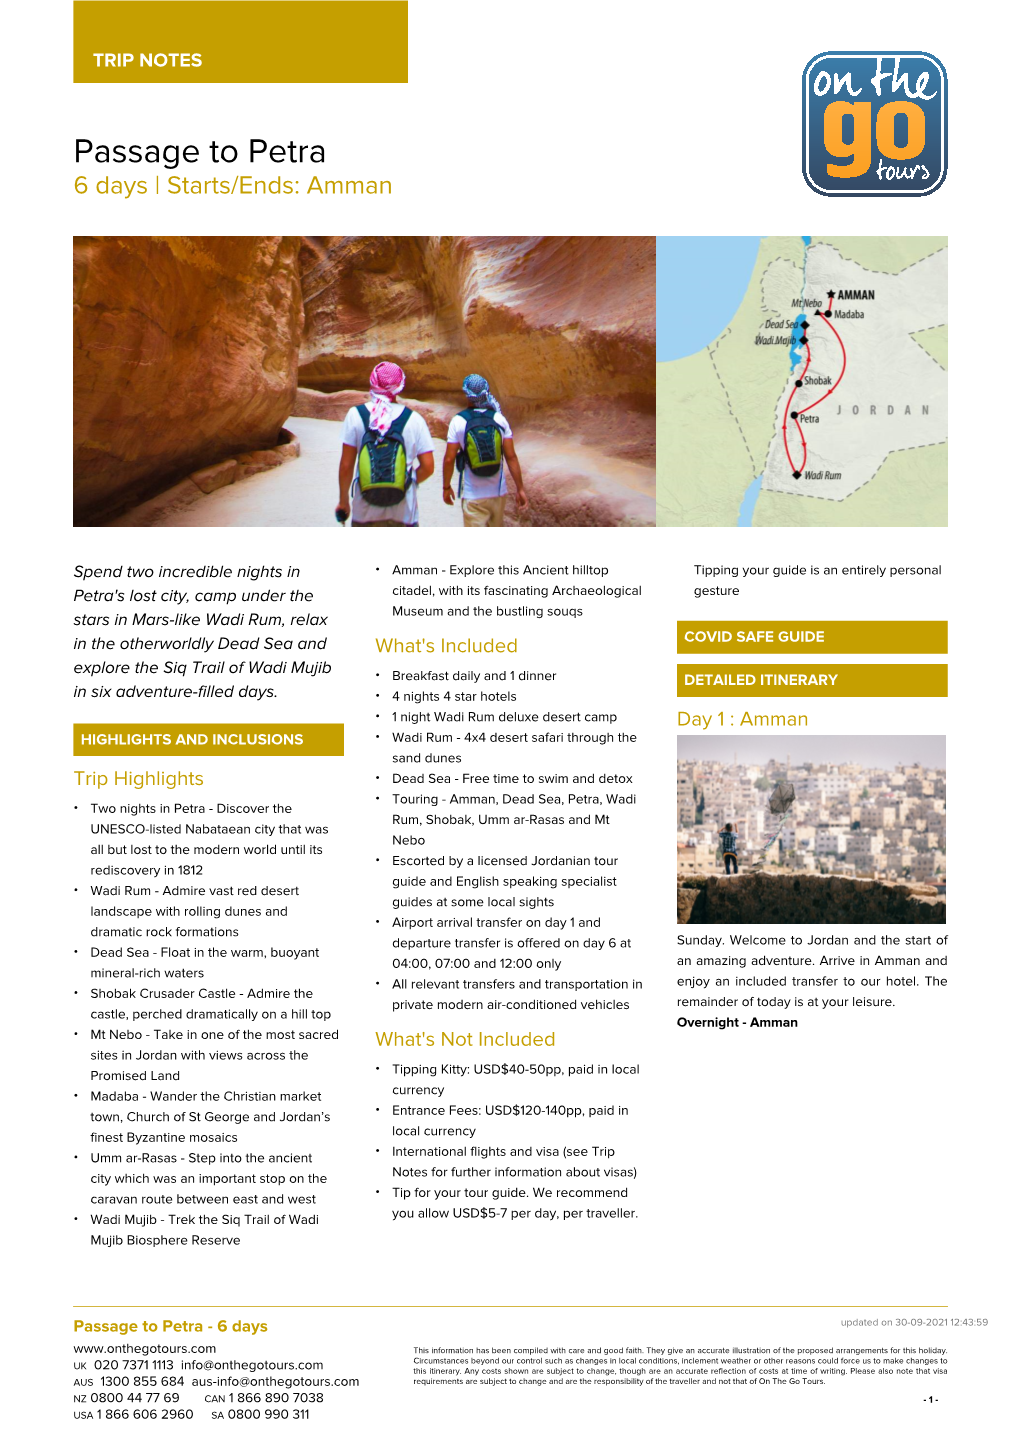 Passage to Petra 6 Days | Starts/Ends: Amman